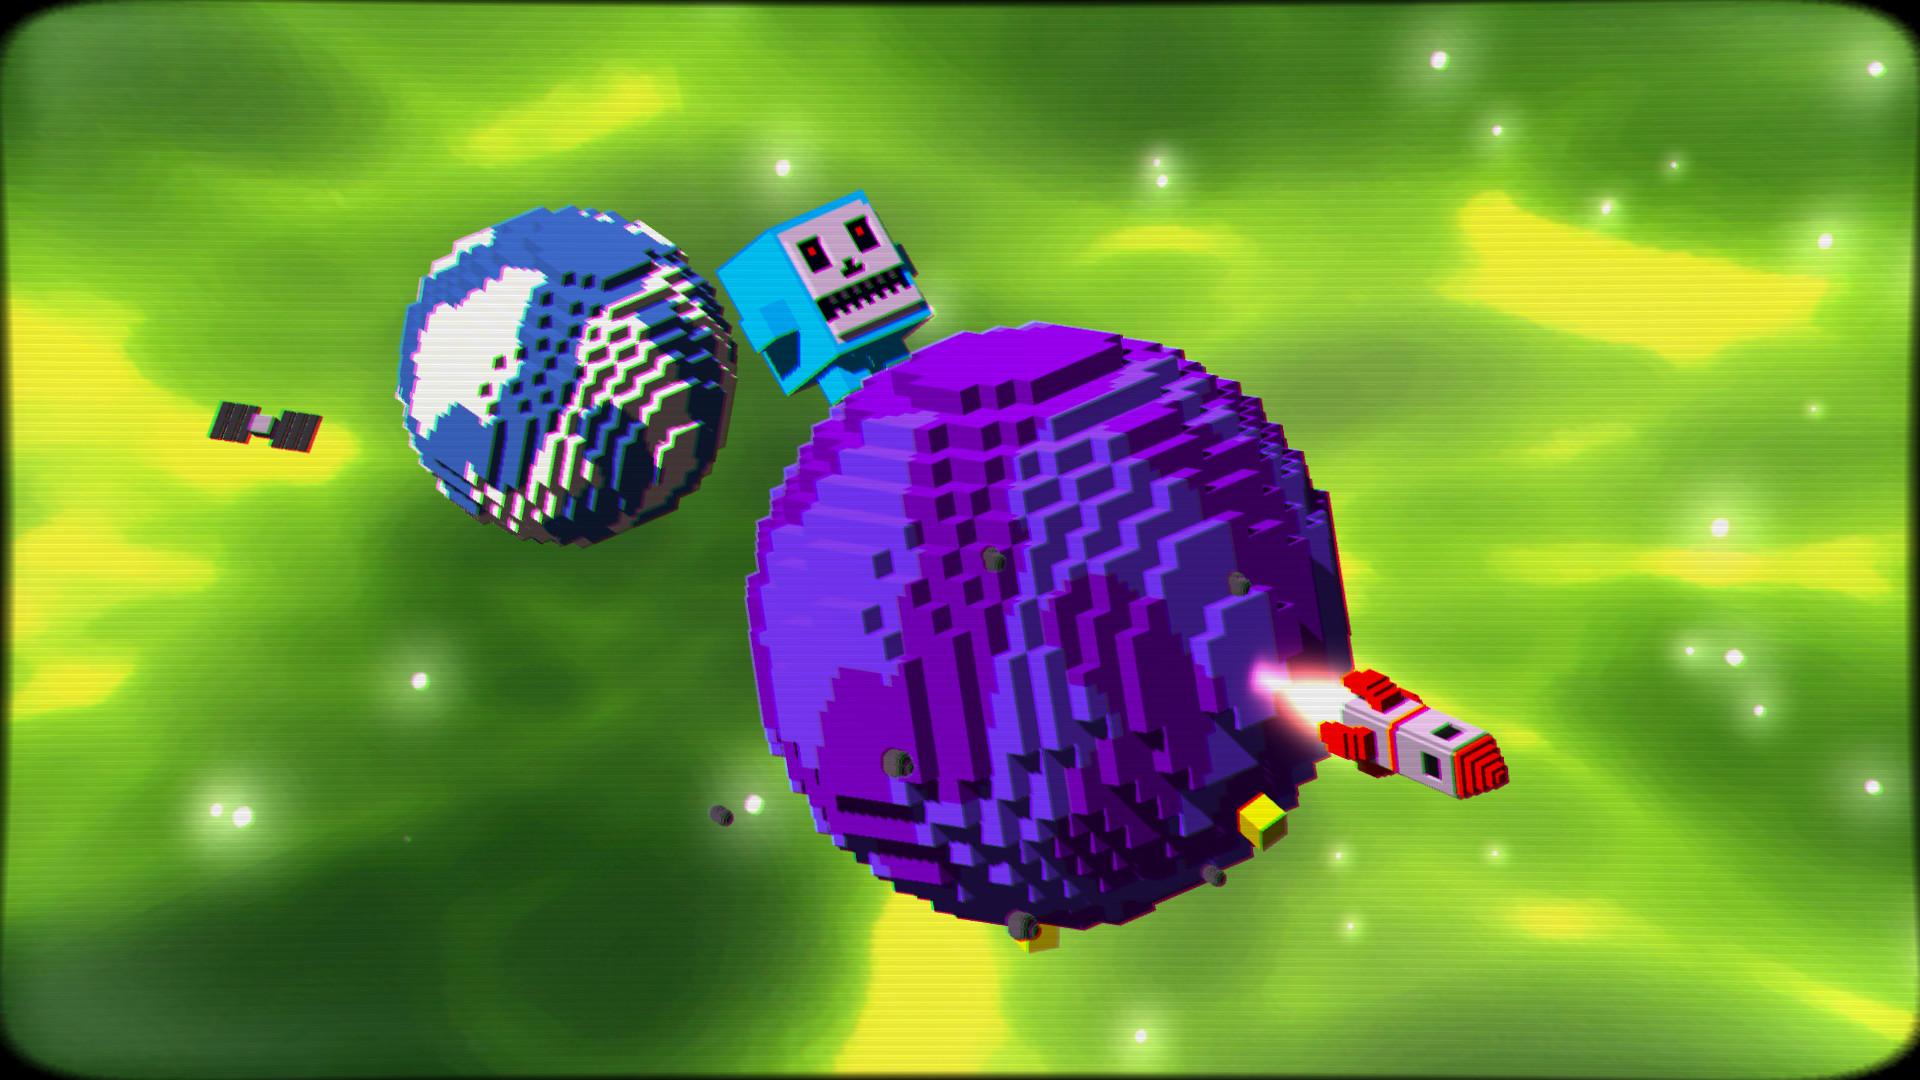 Screenshot №11 from game Cosmic Leap